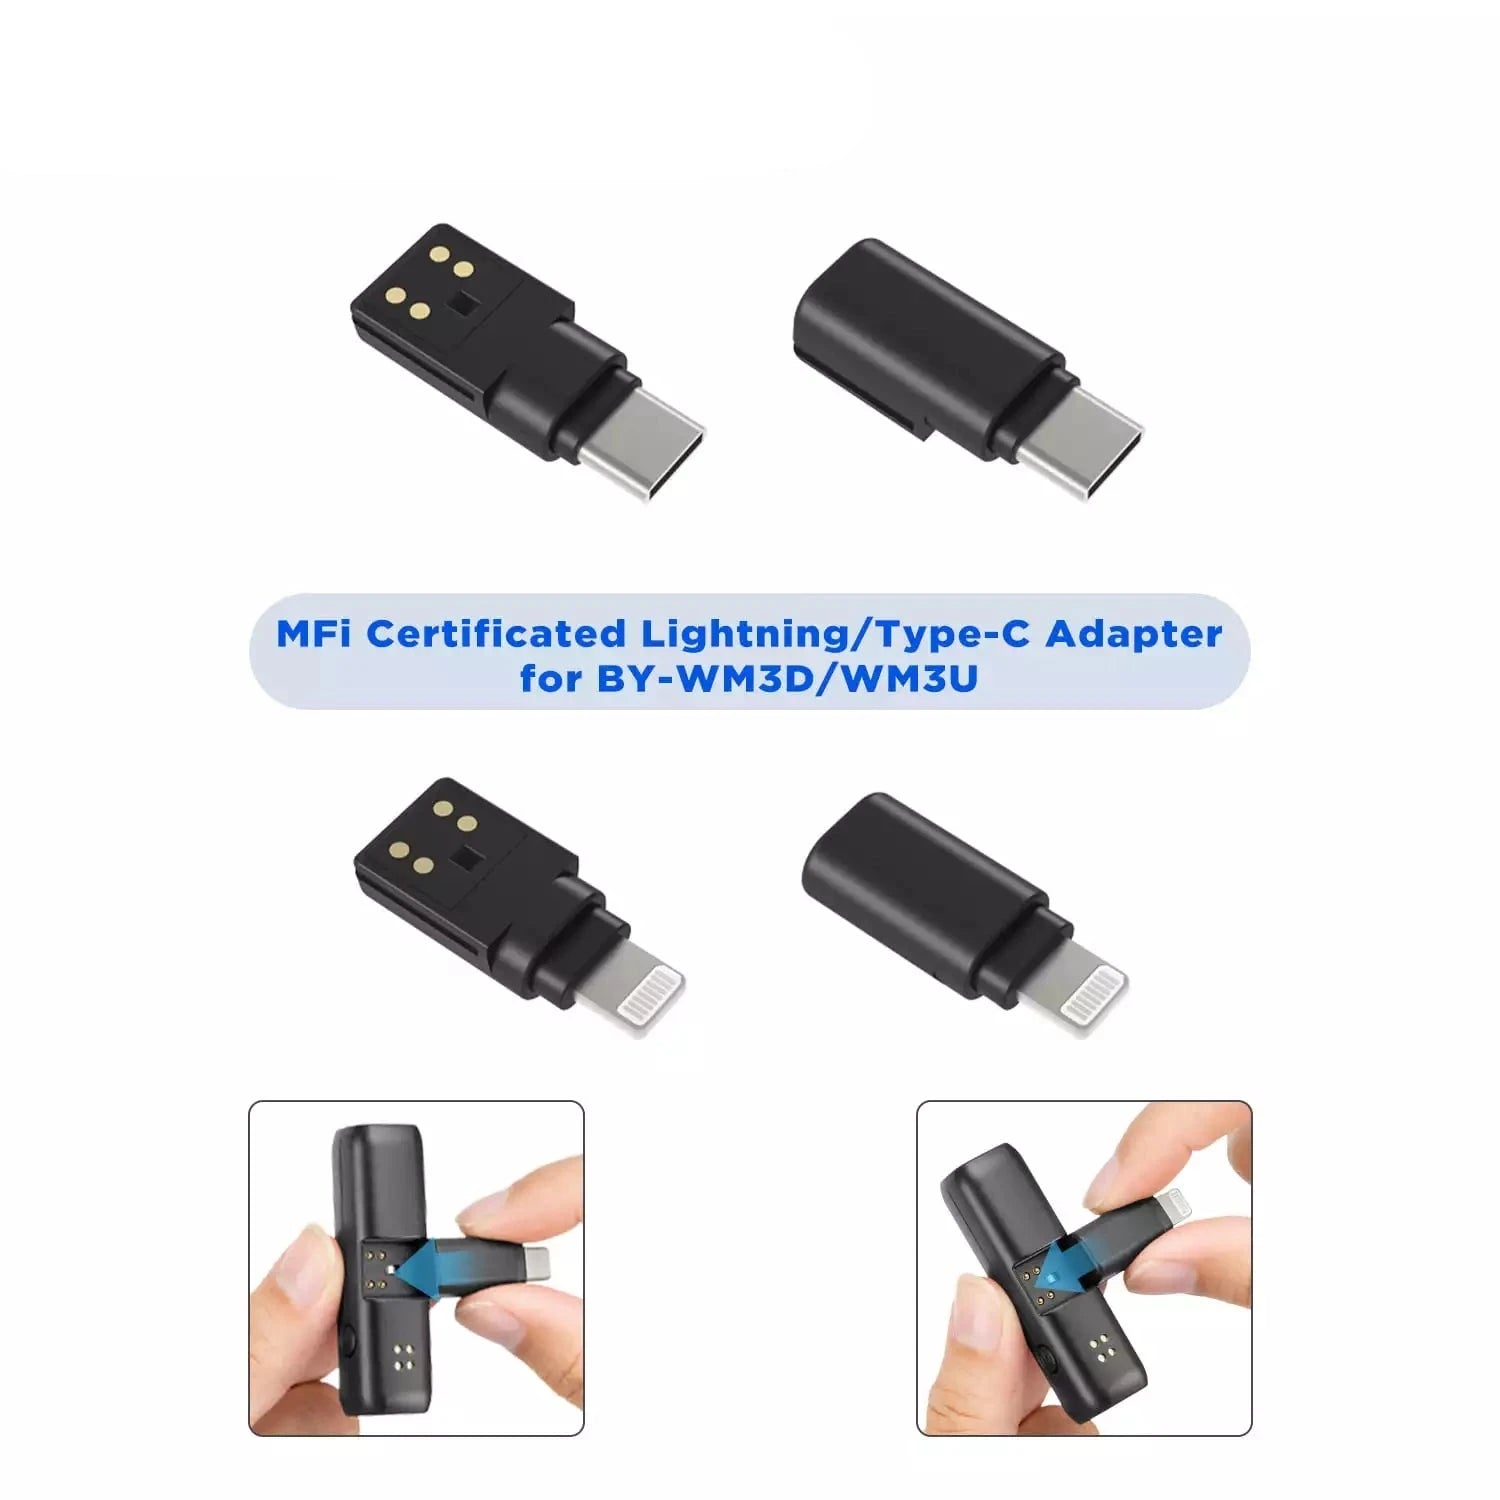 BOYA MFI Certified Lightning to Type-C Adapter for BY-WM3D/WM3U Wireless Microphone